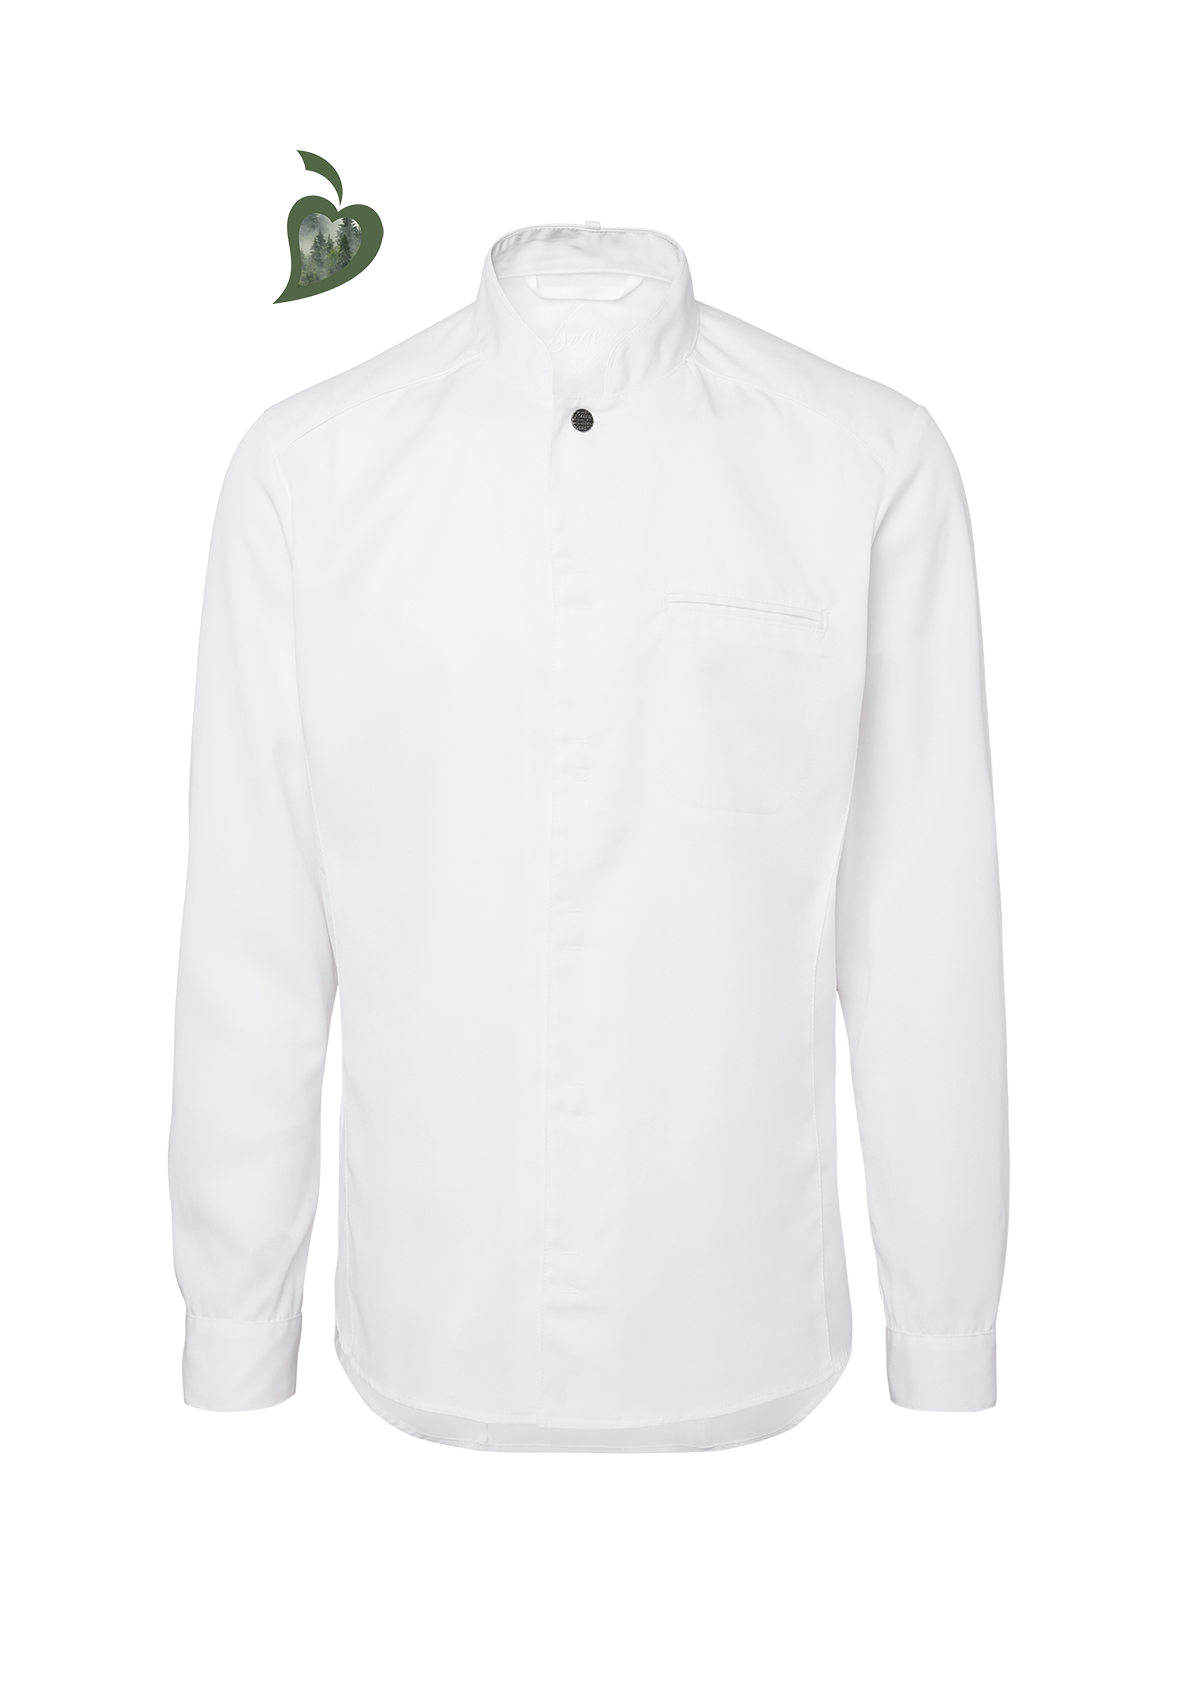 Men's Chef Shirt. Segers | Cookniche